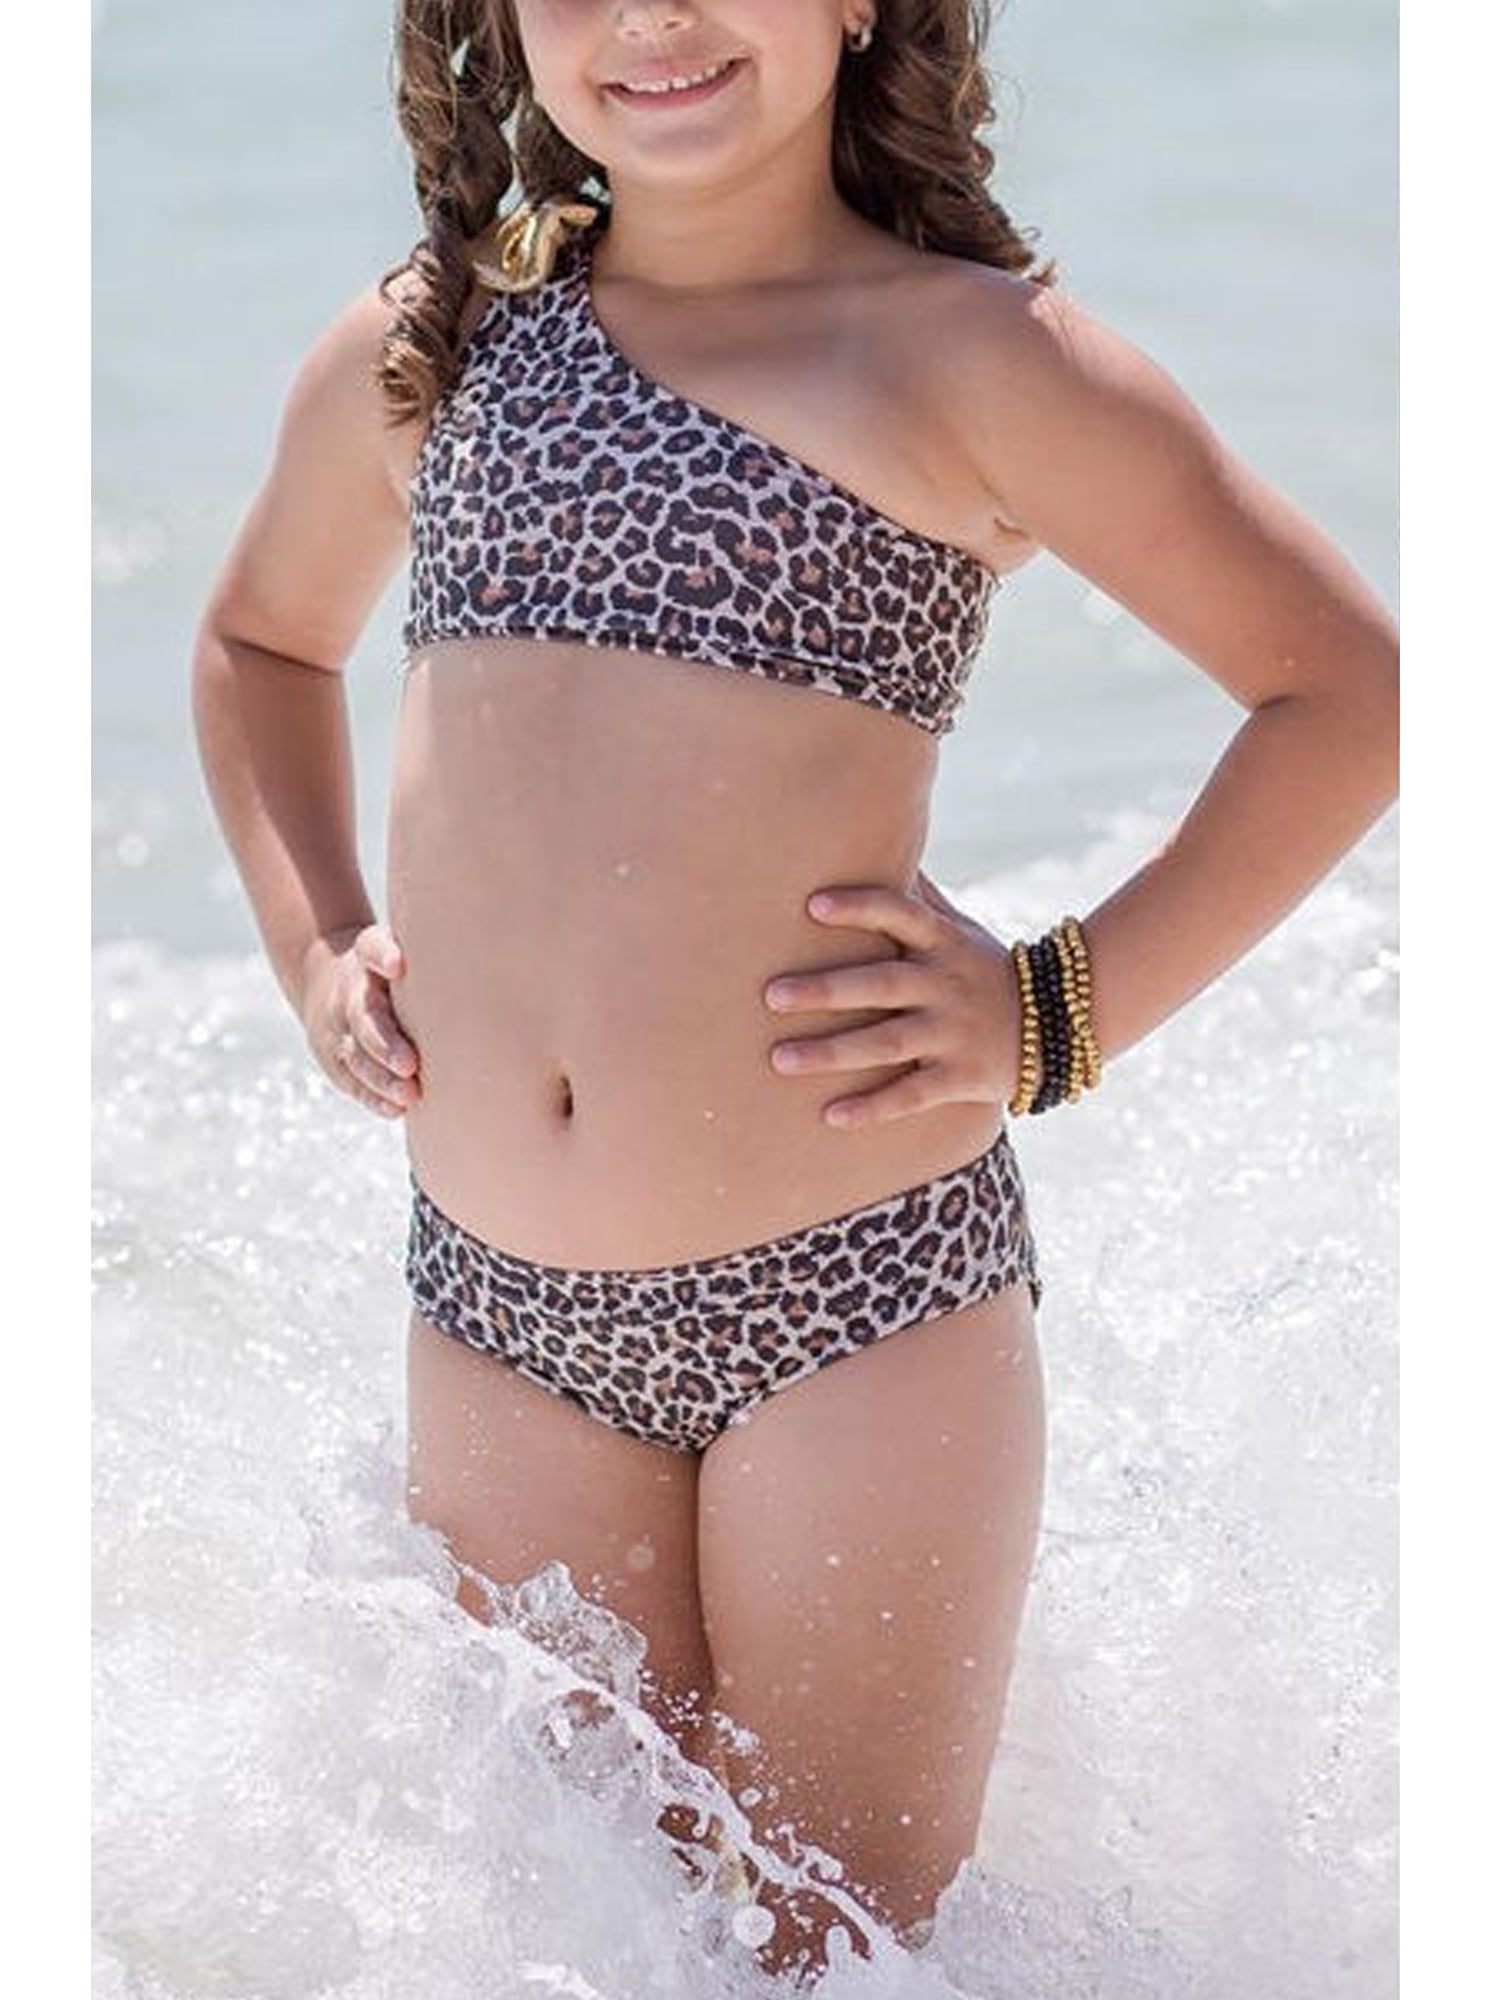 3Pcs/Set Infant Kid Baby Girls Swimsuit Leopard Print Bikini Swimwear Beachwear Swimming Suit Outfits 3M-3Y 